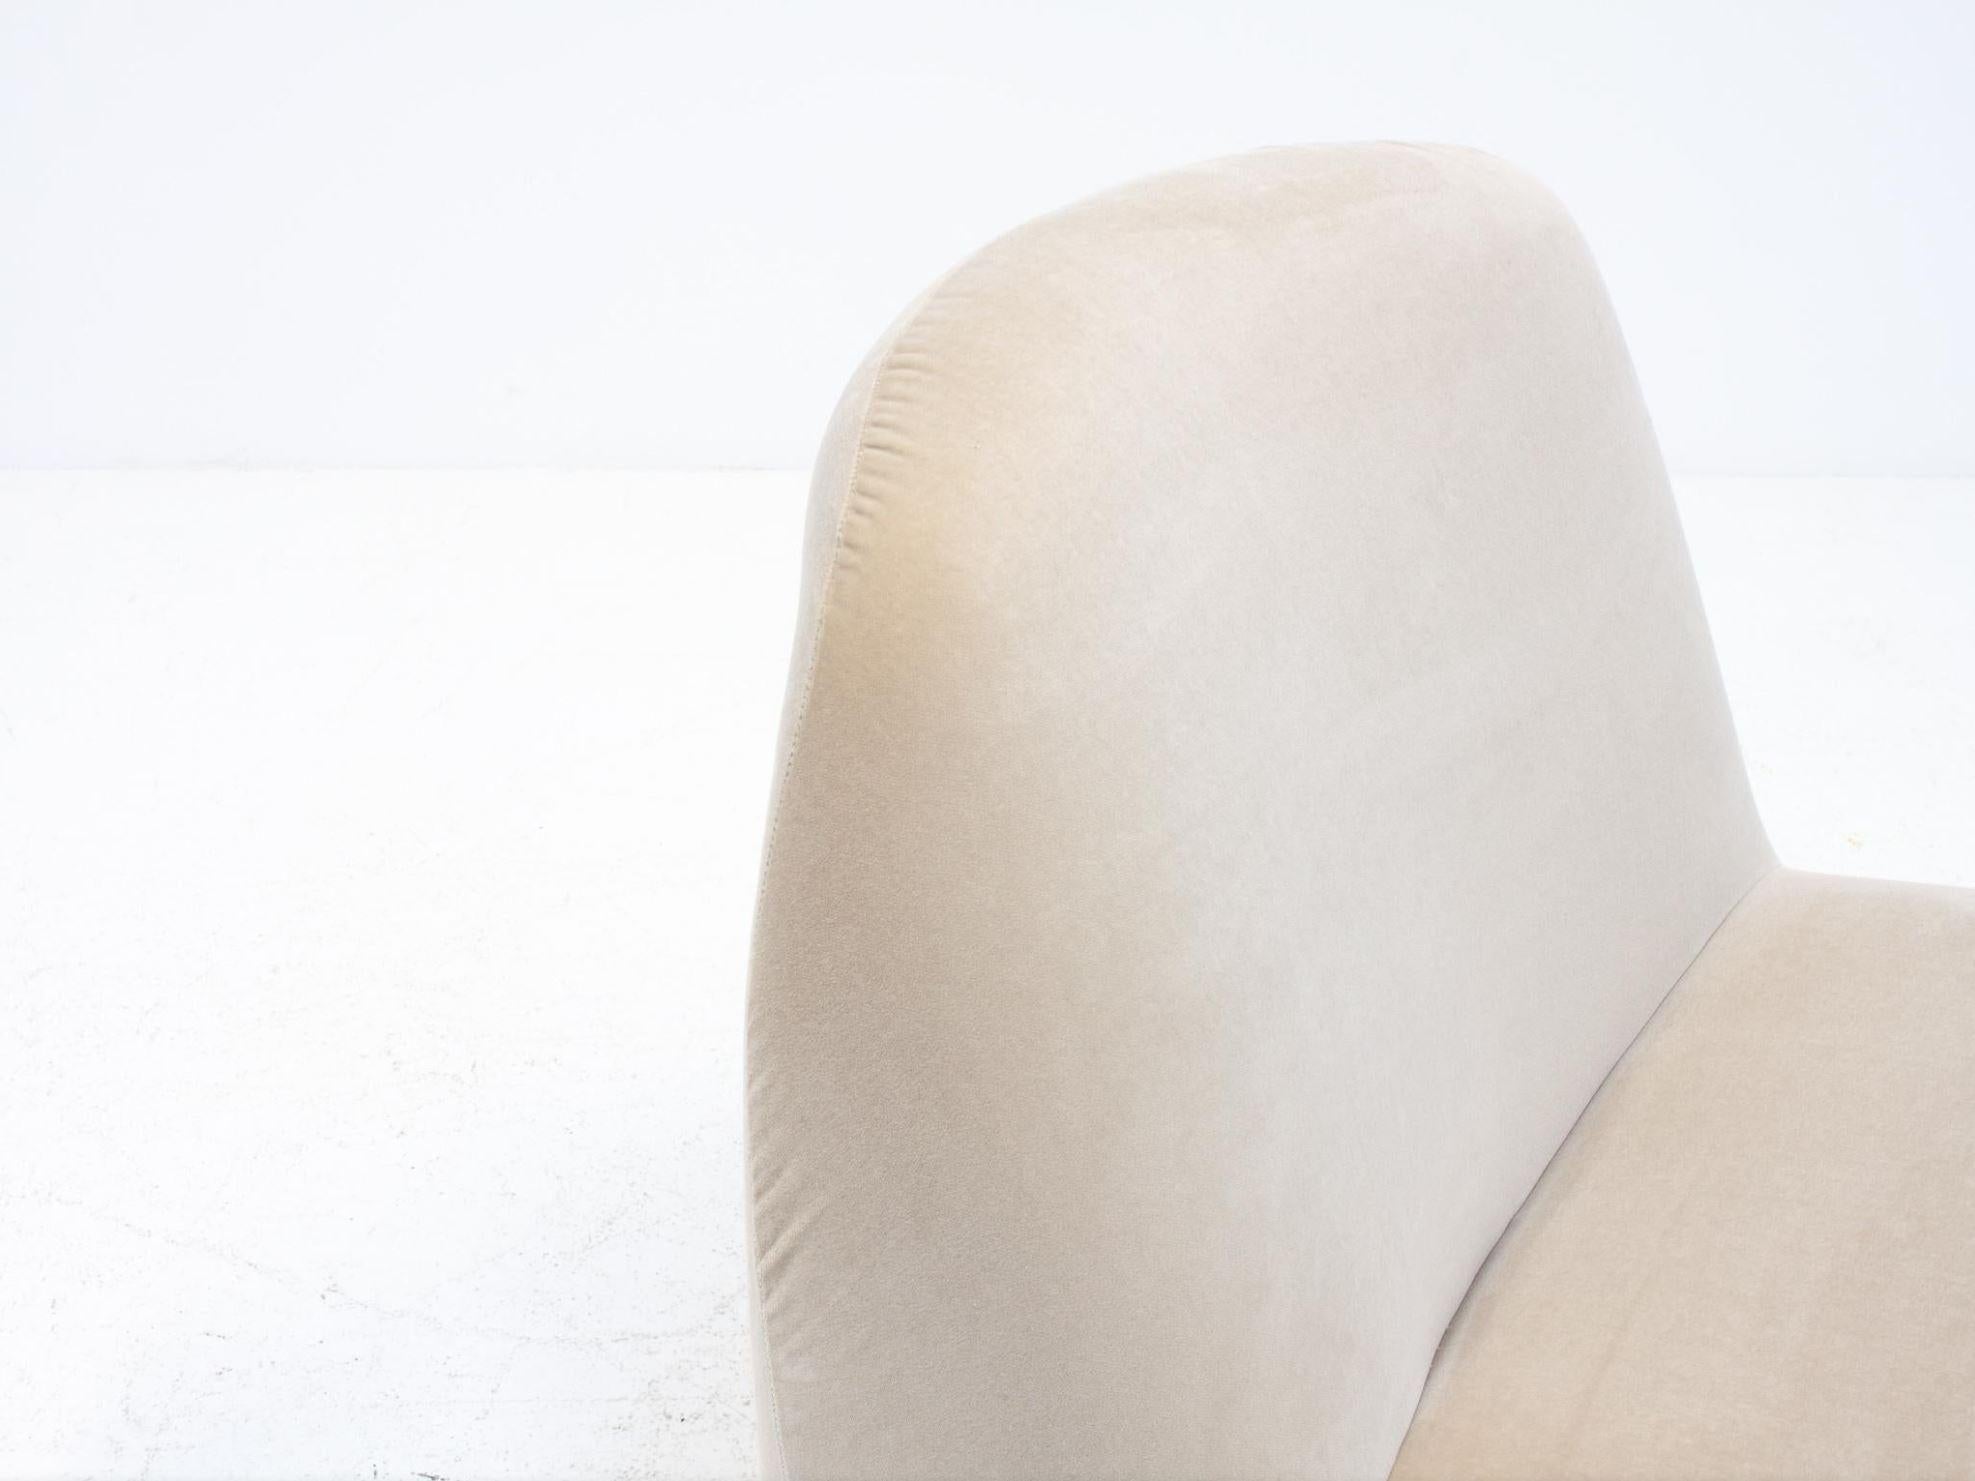 Giancarlo Piretti “Alky” Chair in New Velvet, Artifort, 1970s, *Customizable* For Sale 4